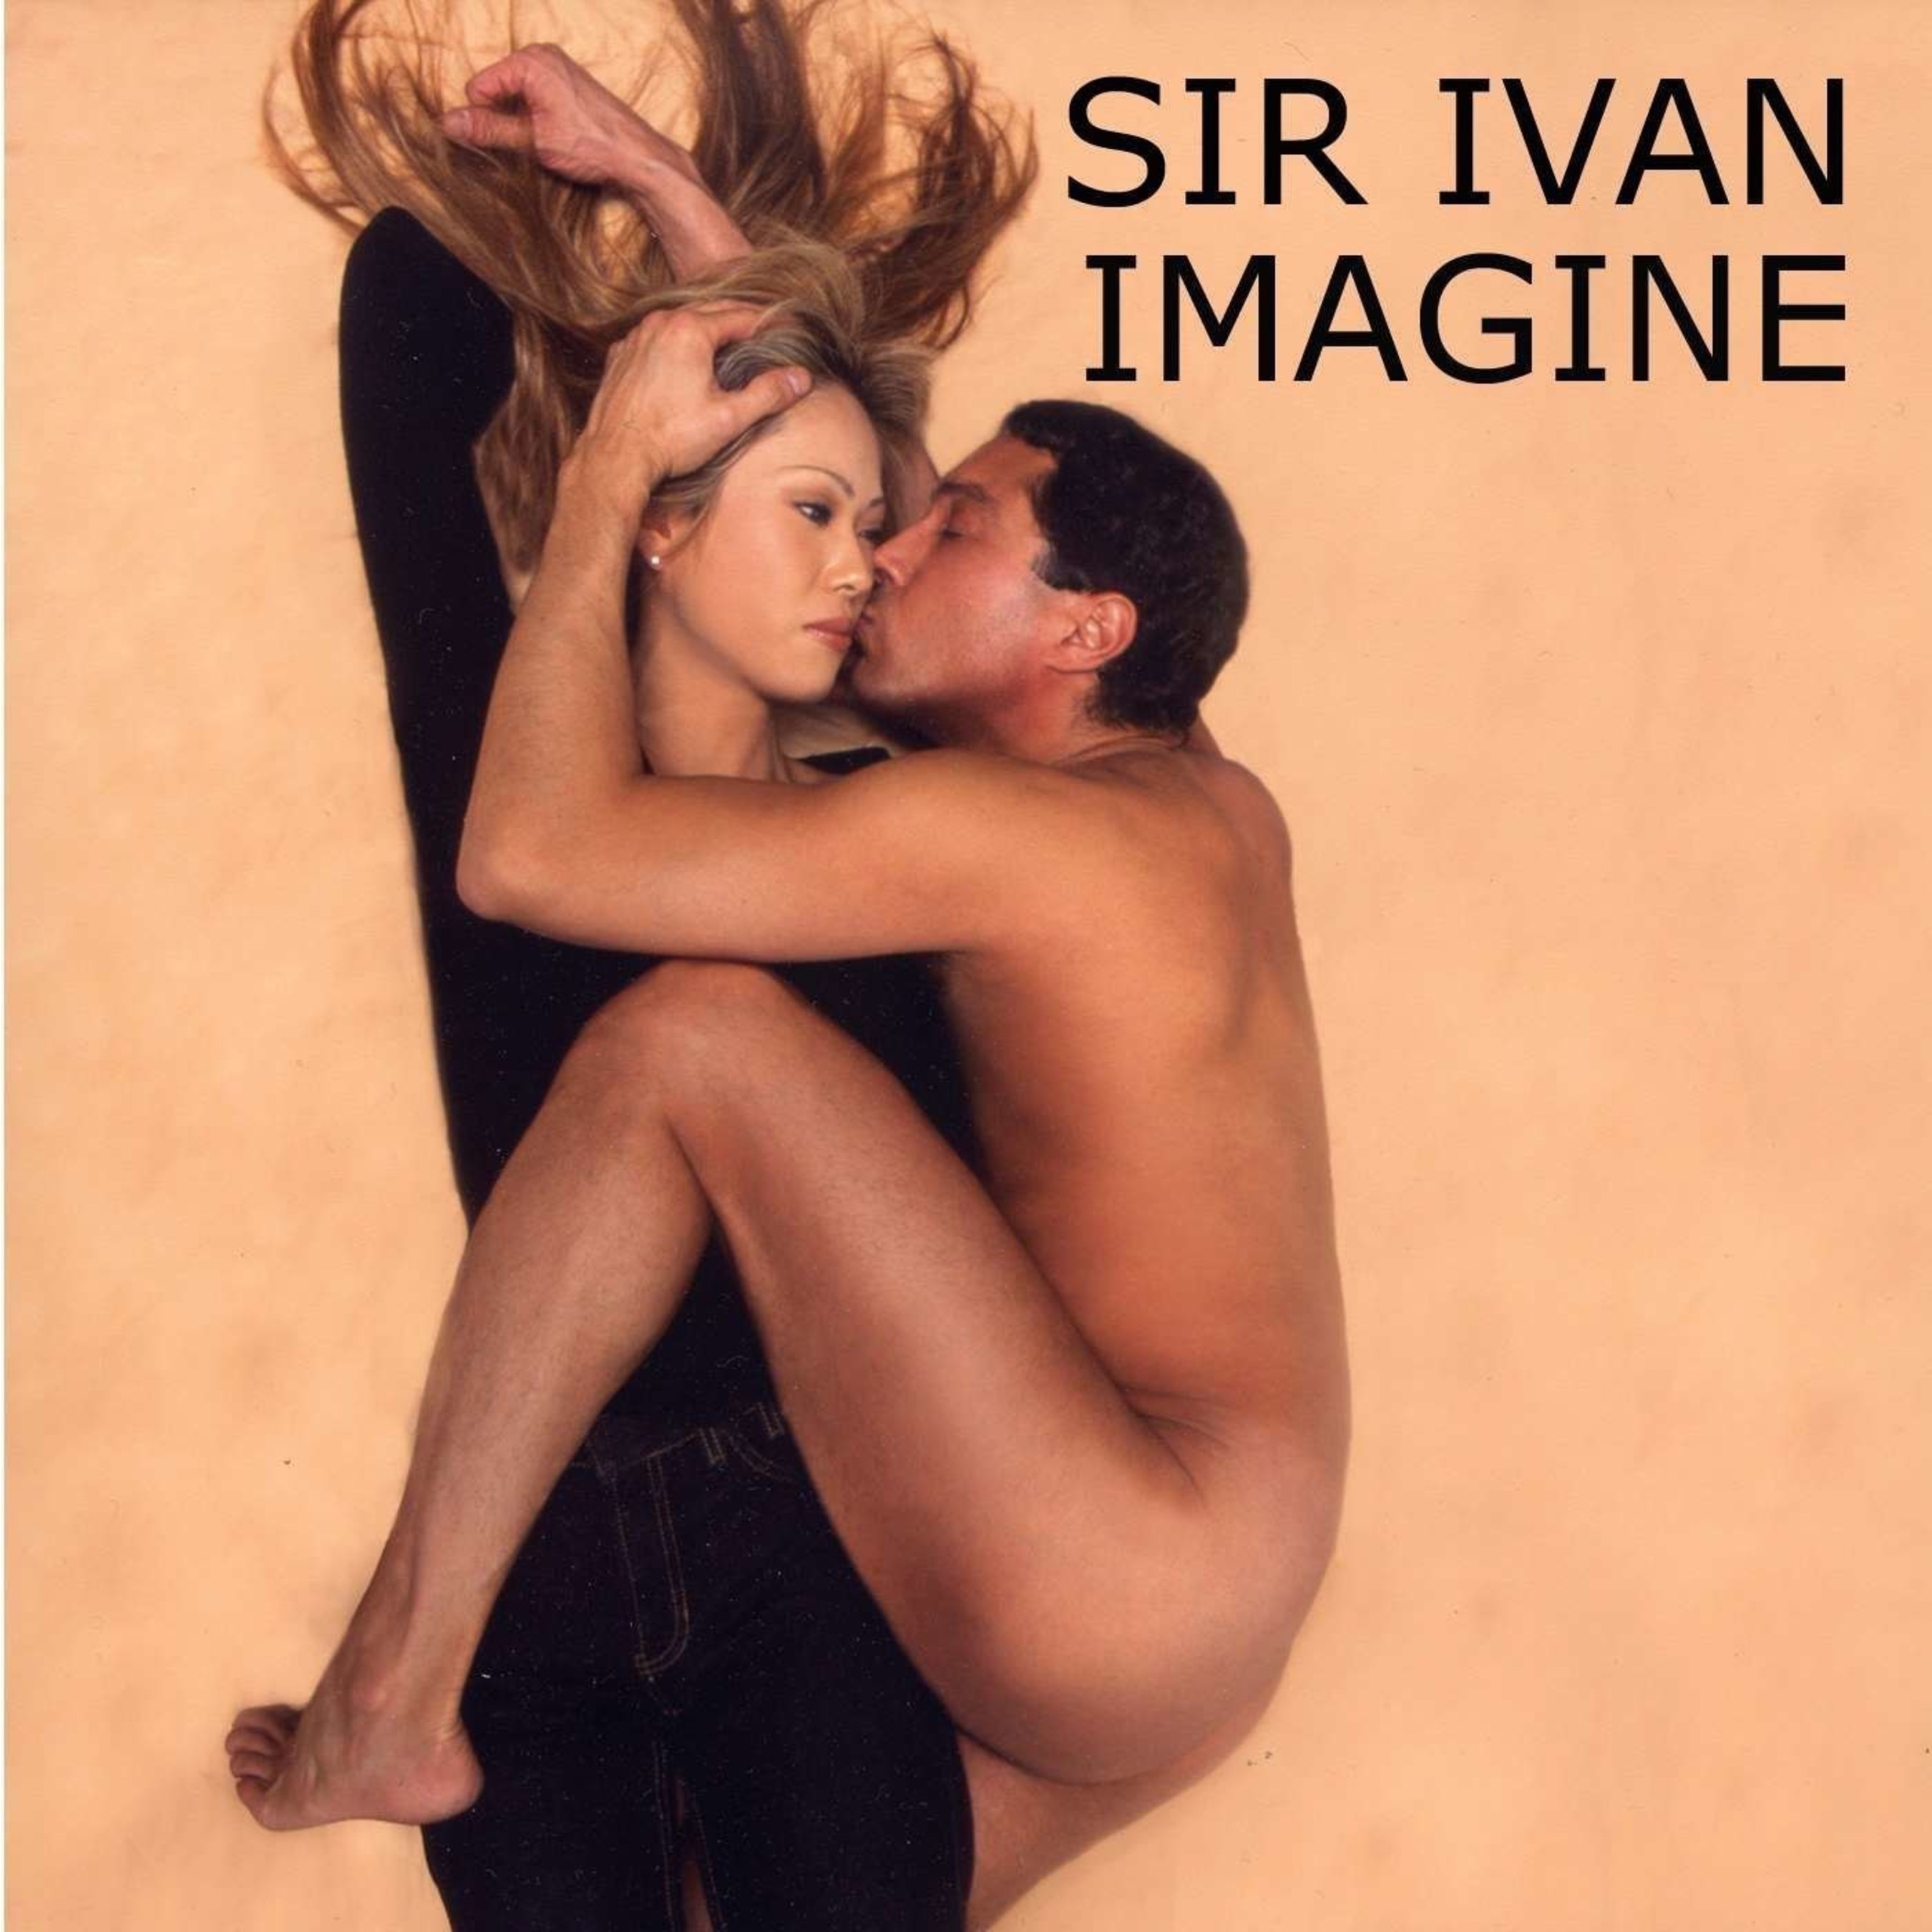 Cover Art for Sir Ivan's New Single "Imagine"